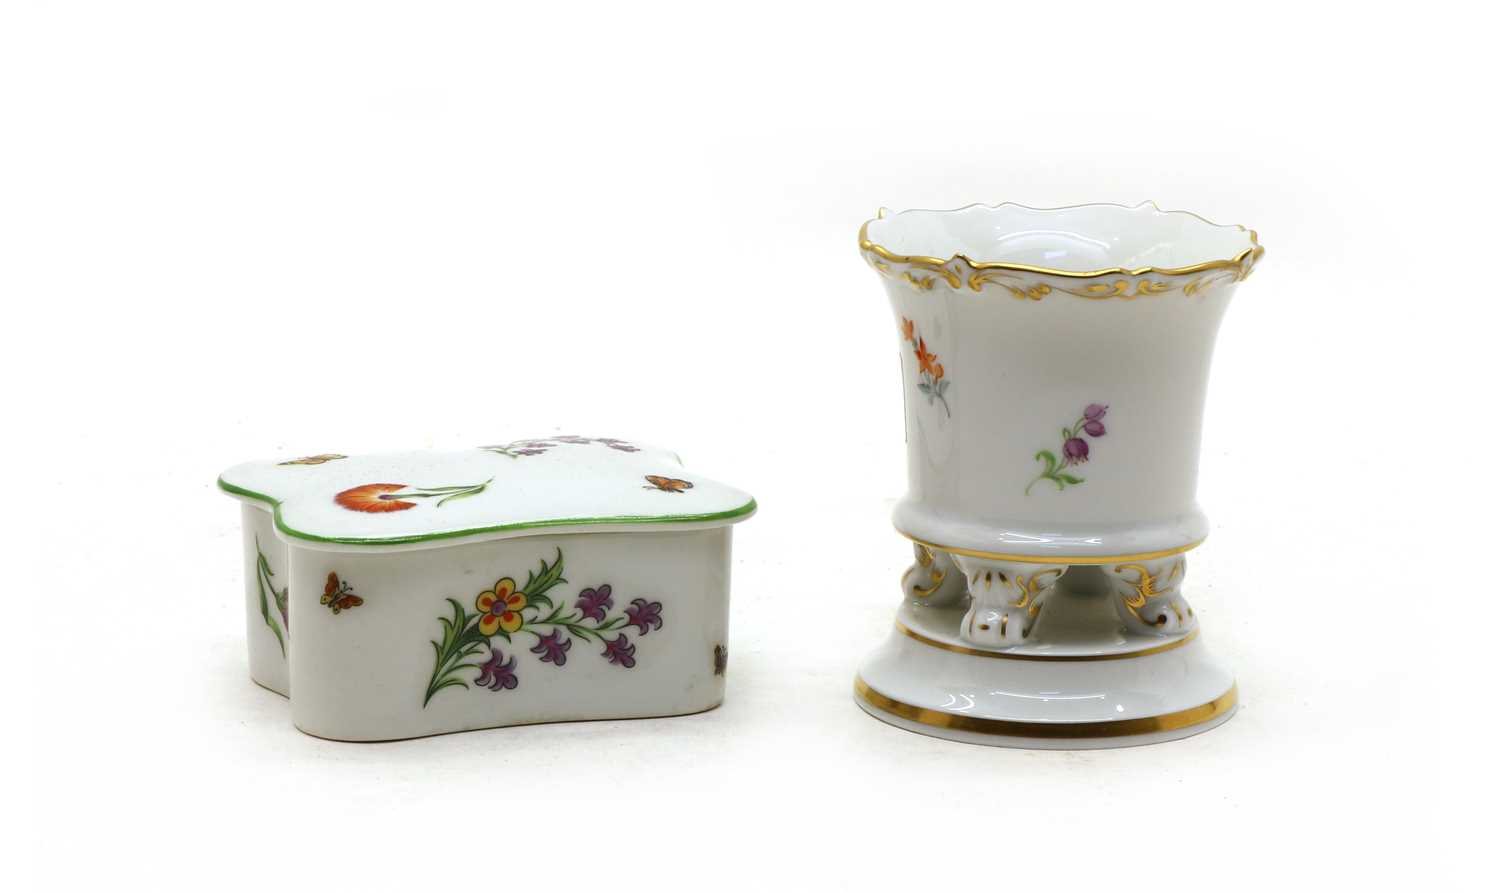 Lot 45 - An early 20th century Meissen porcelain miniature comport